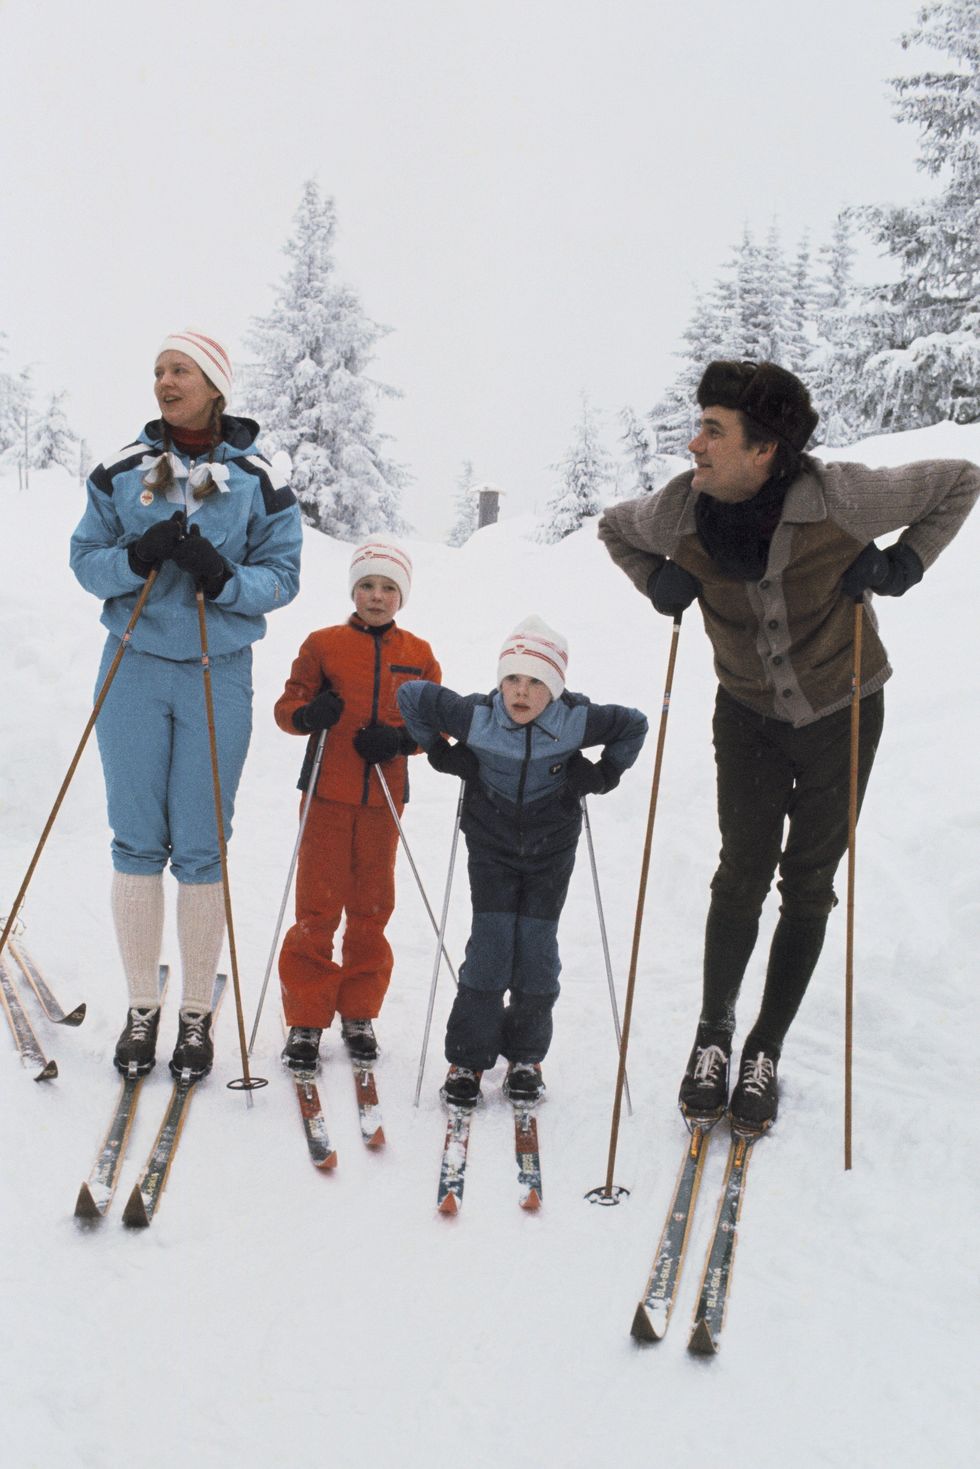 snow, trekking pole, ski, skiing, winter, snowshoe, footwear, ski equipment, cross country skier, ski pole,